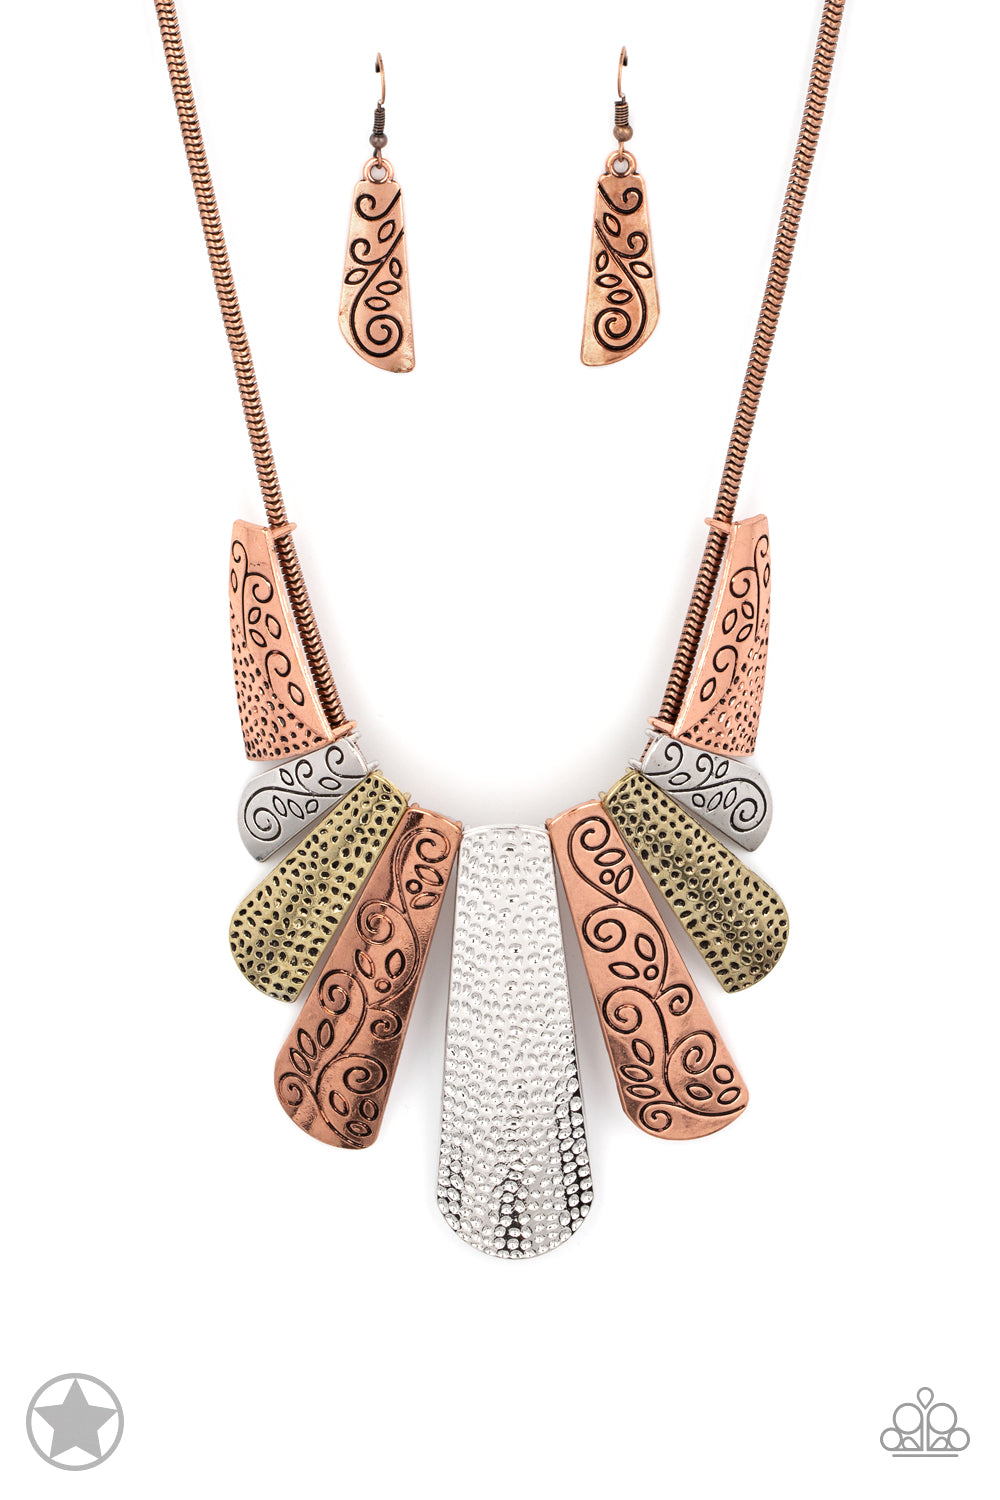 Untamed - Copper Necklace